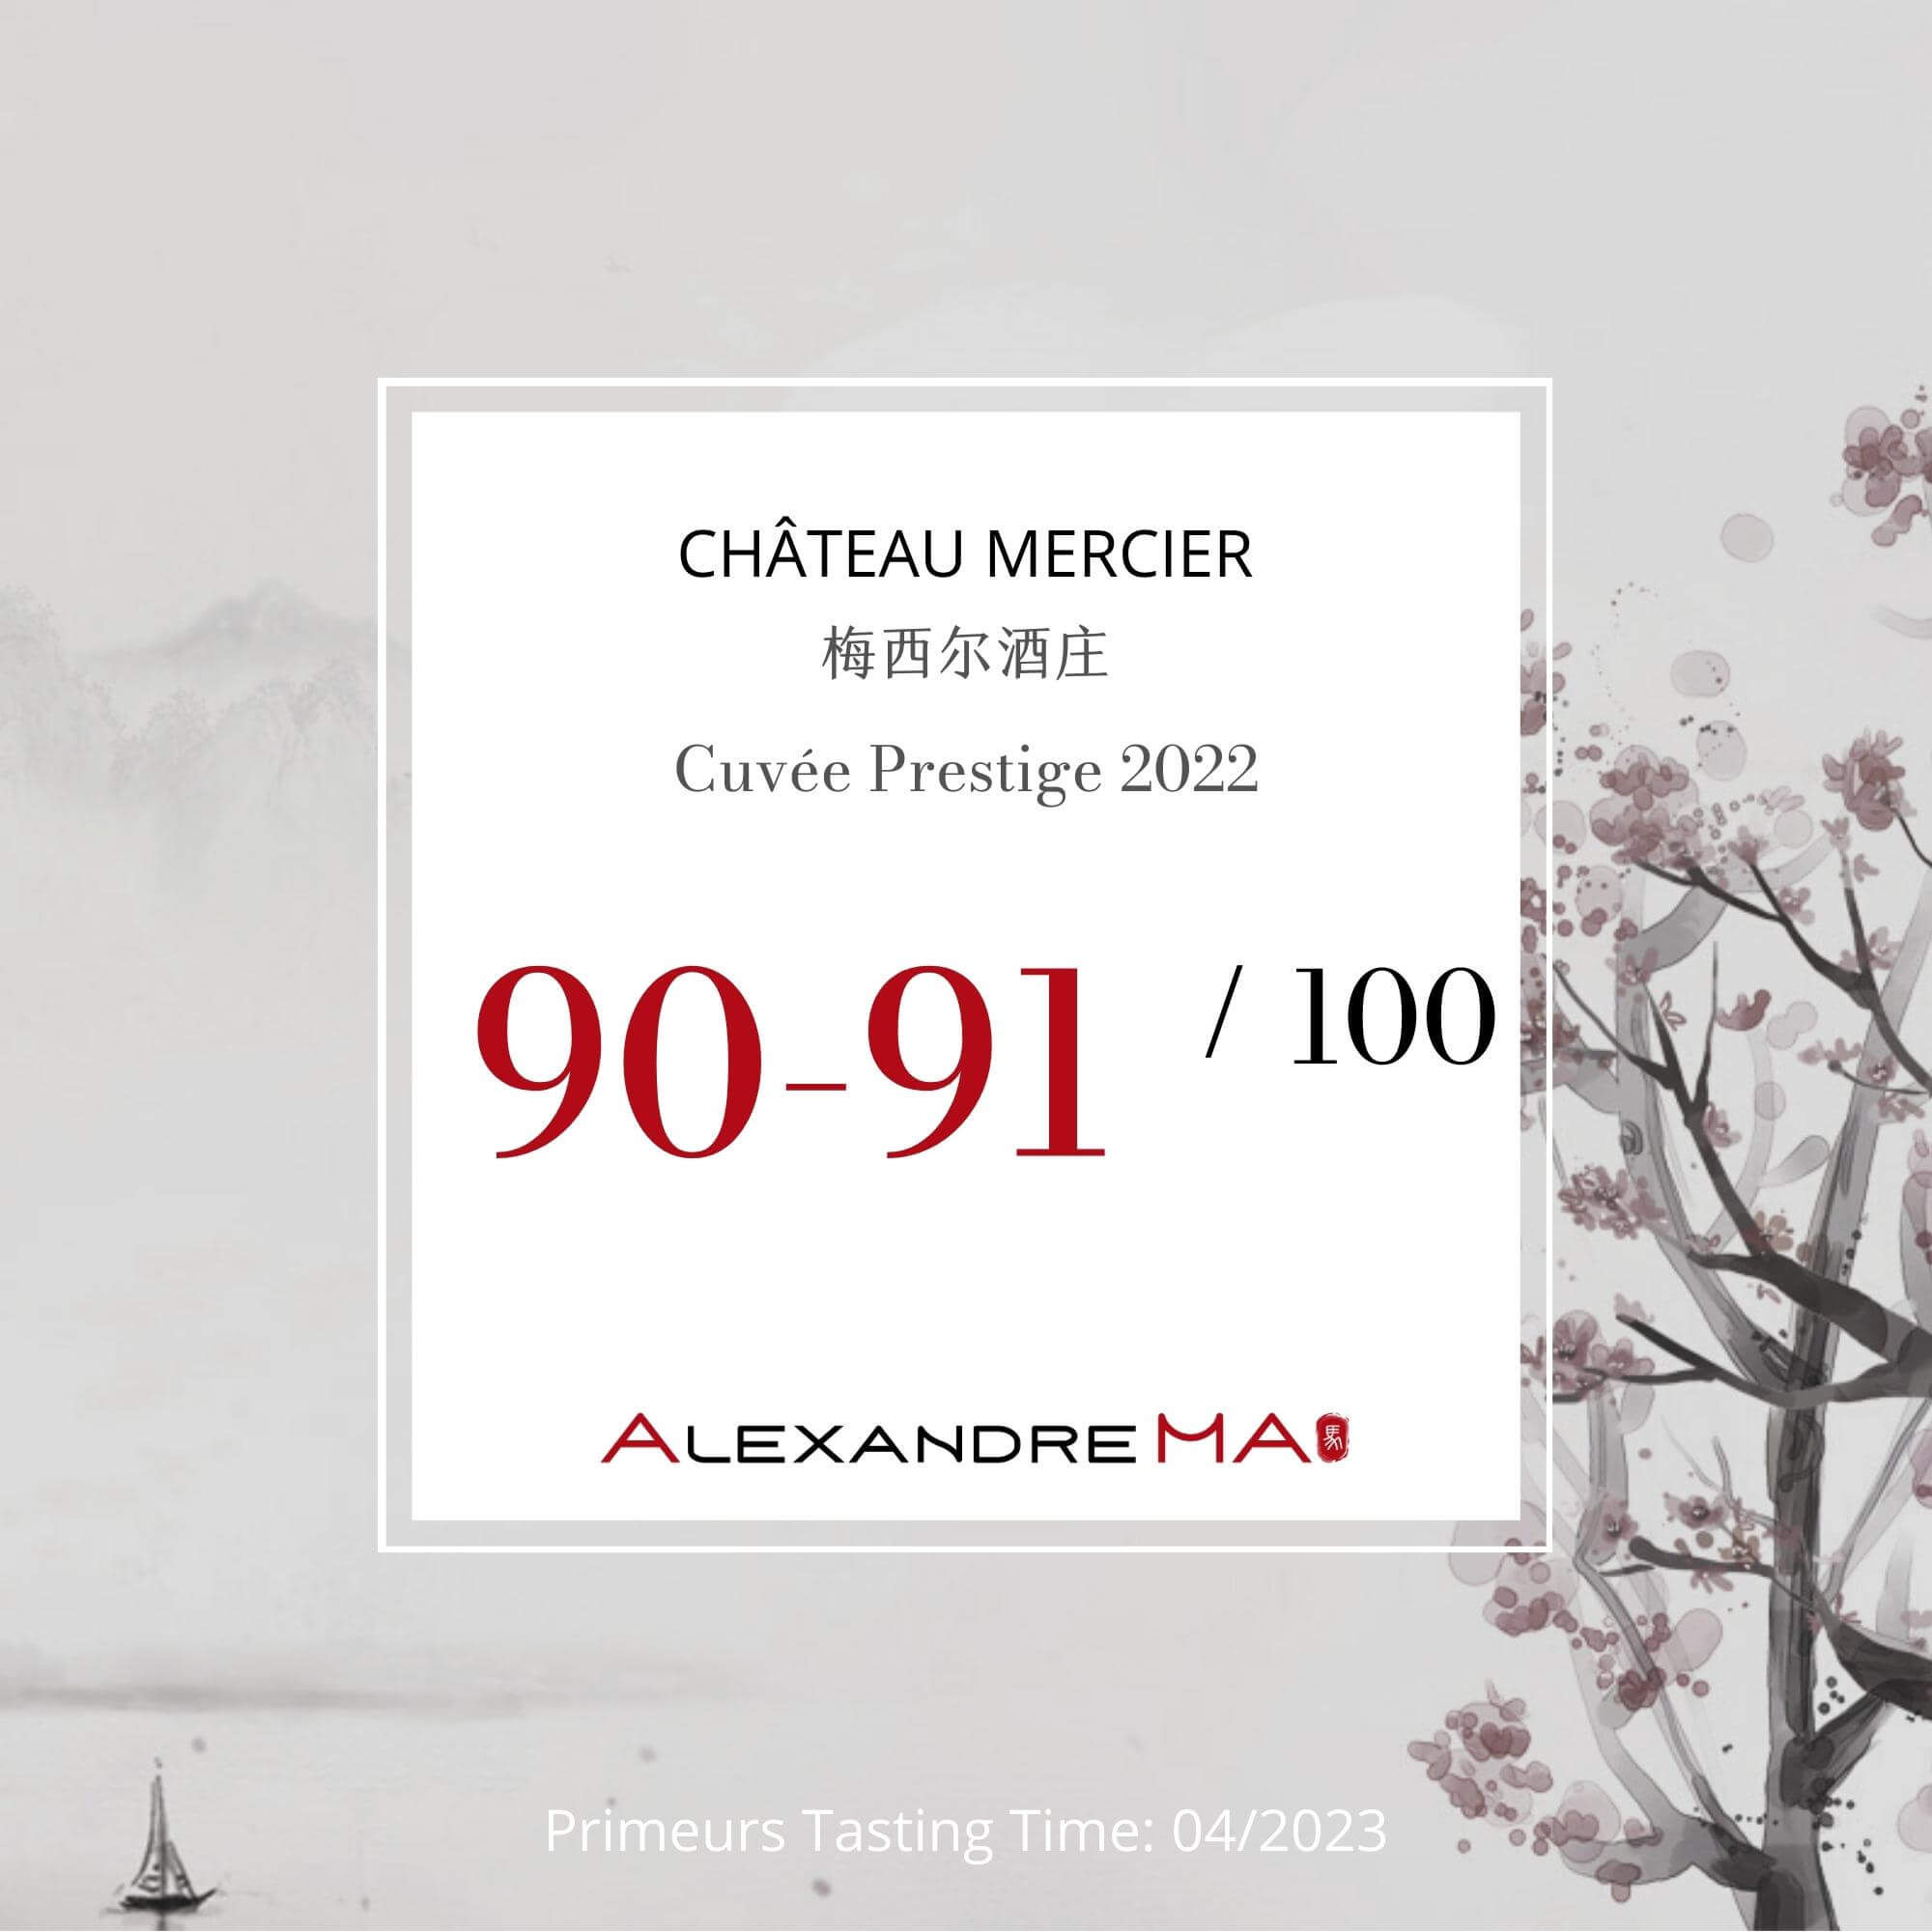 Château Mercier-Cuvée Prestige 2022 Primeurs - Alexandre MA